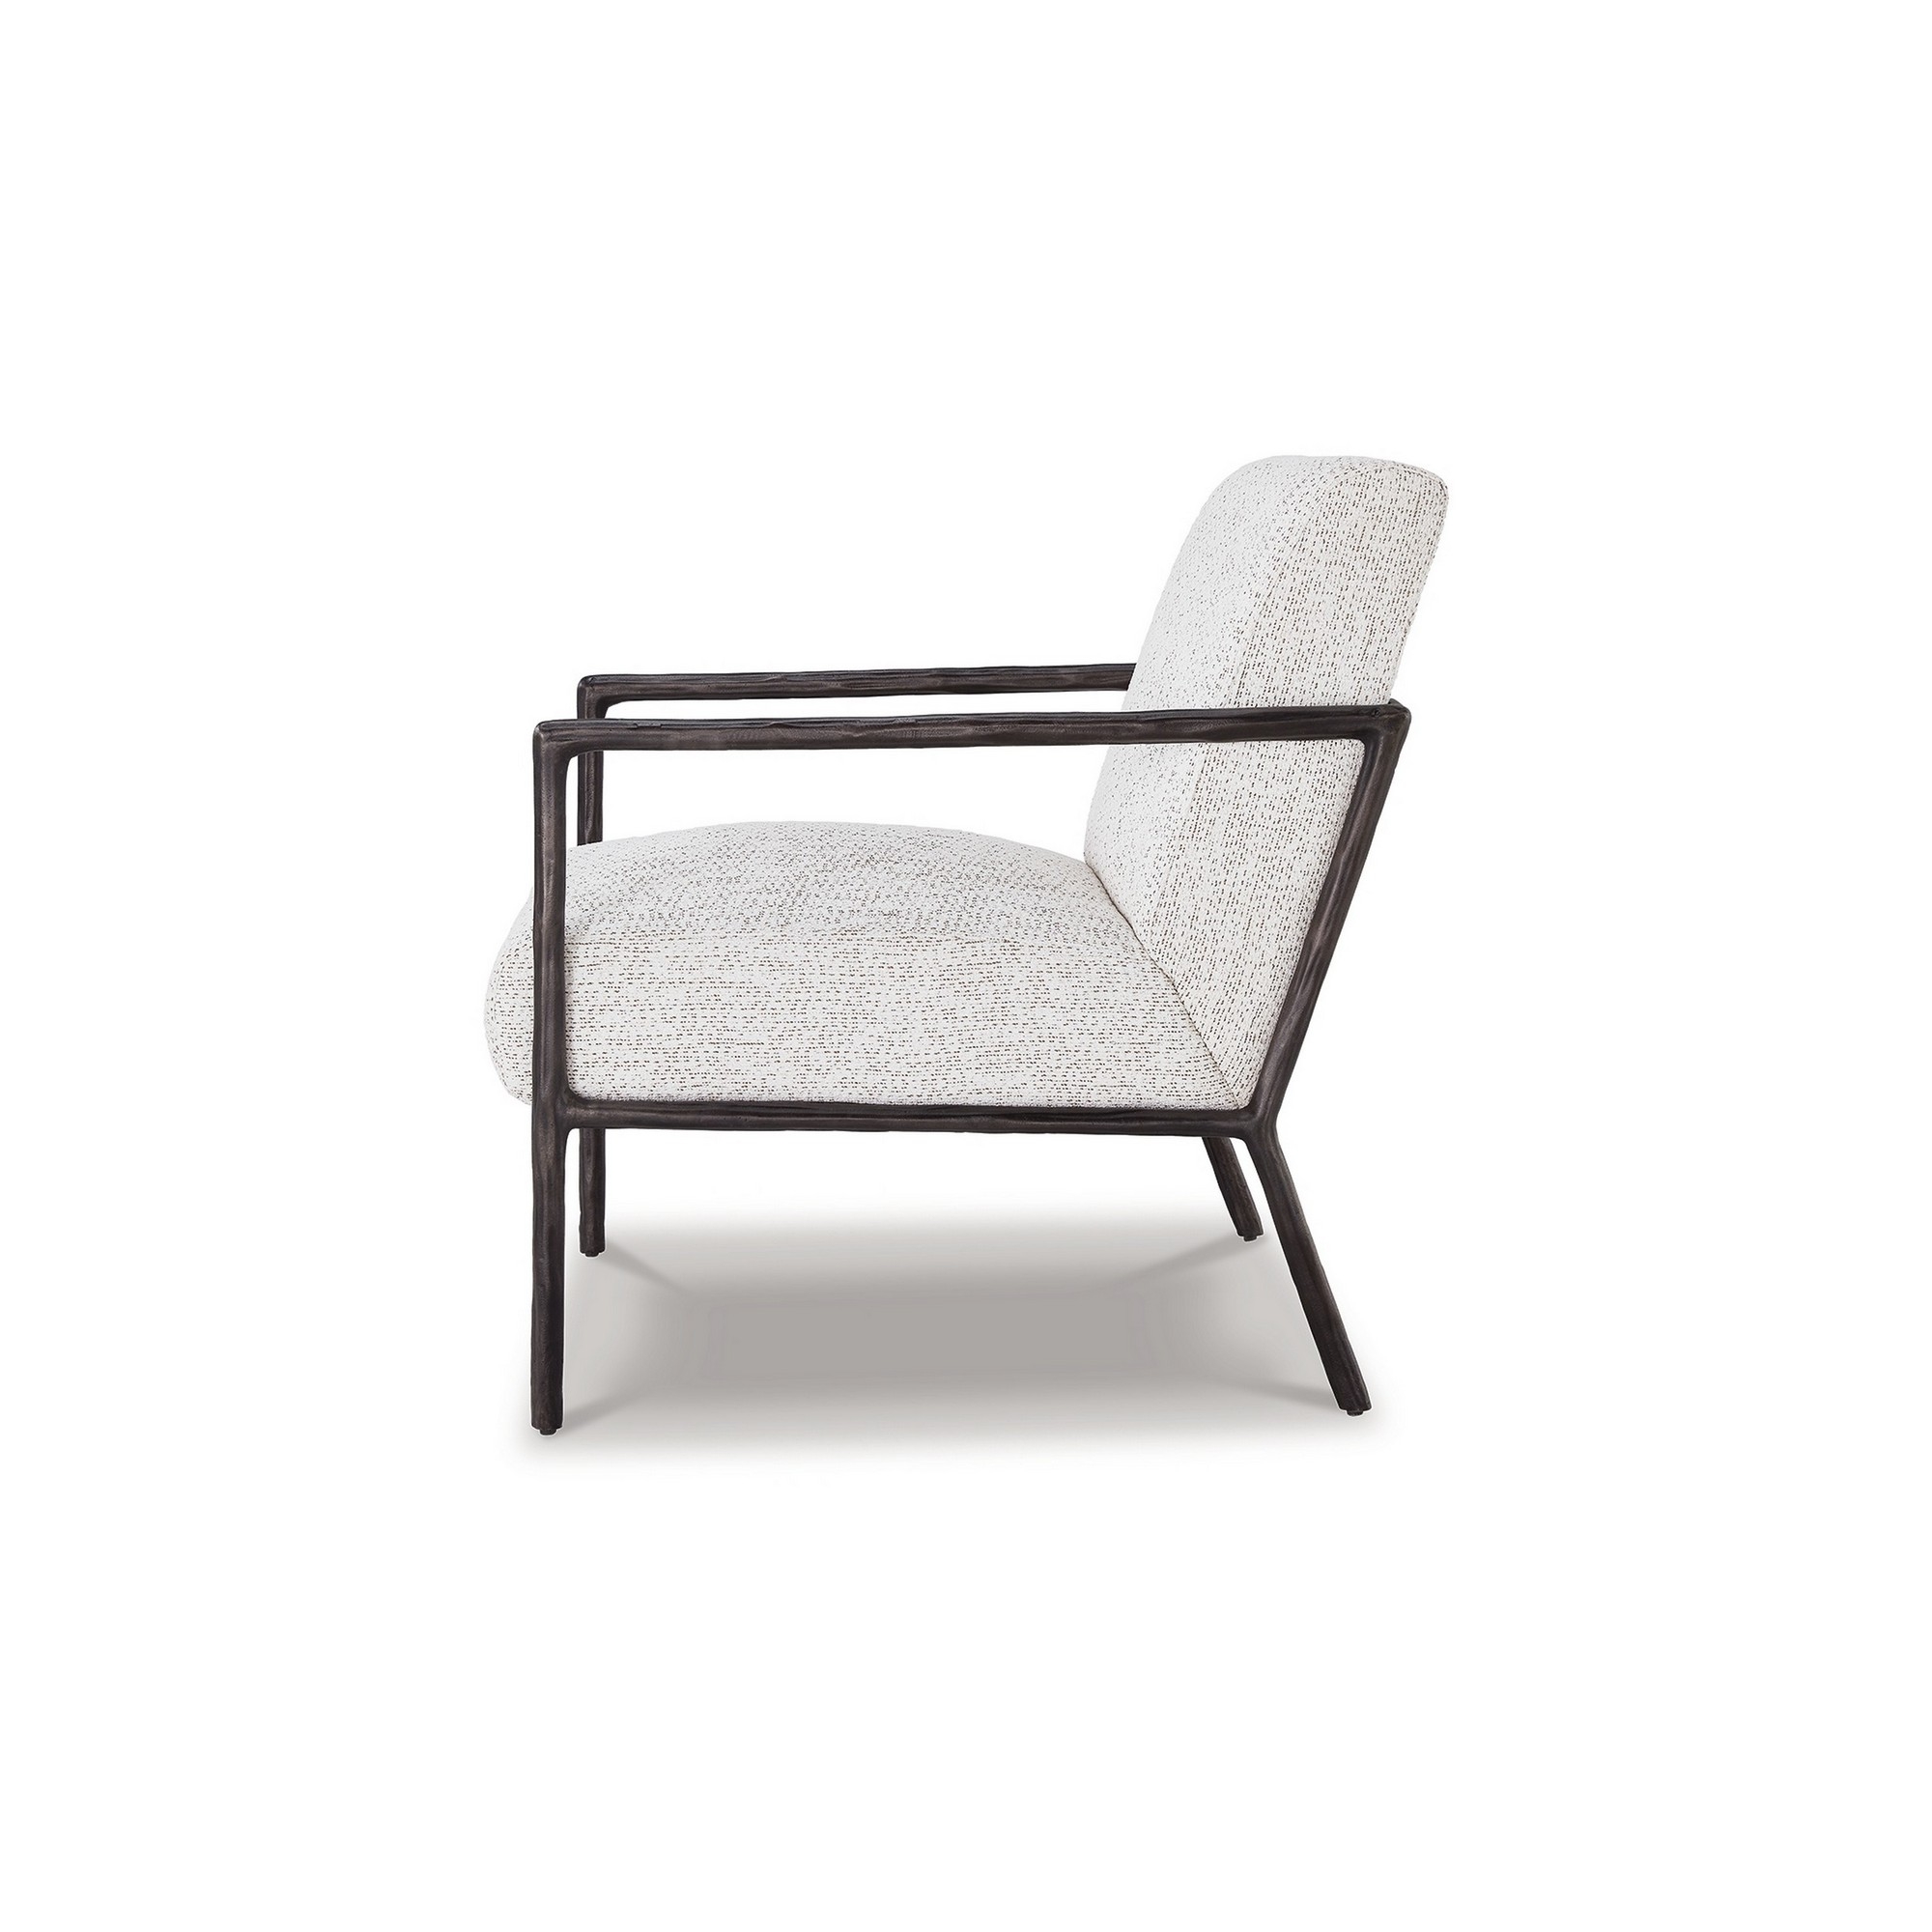 Tusk 29 Inch Accent Chair, Classic Black Aluminum Frame, White Upholstery- Saltoro Sherpi